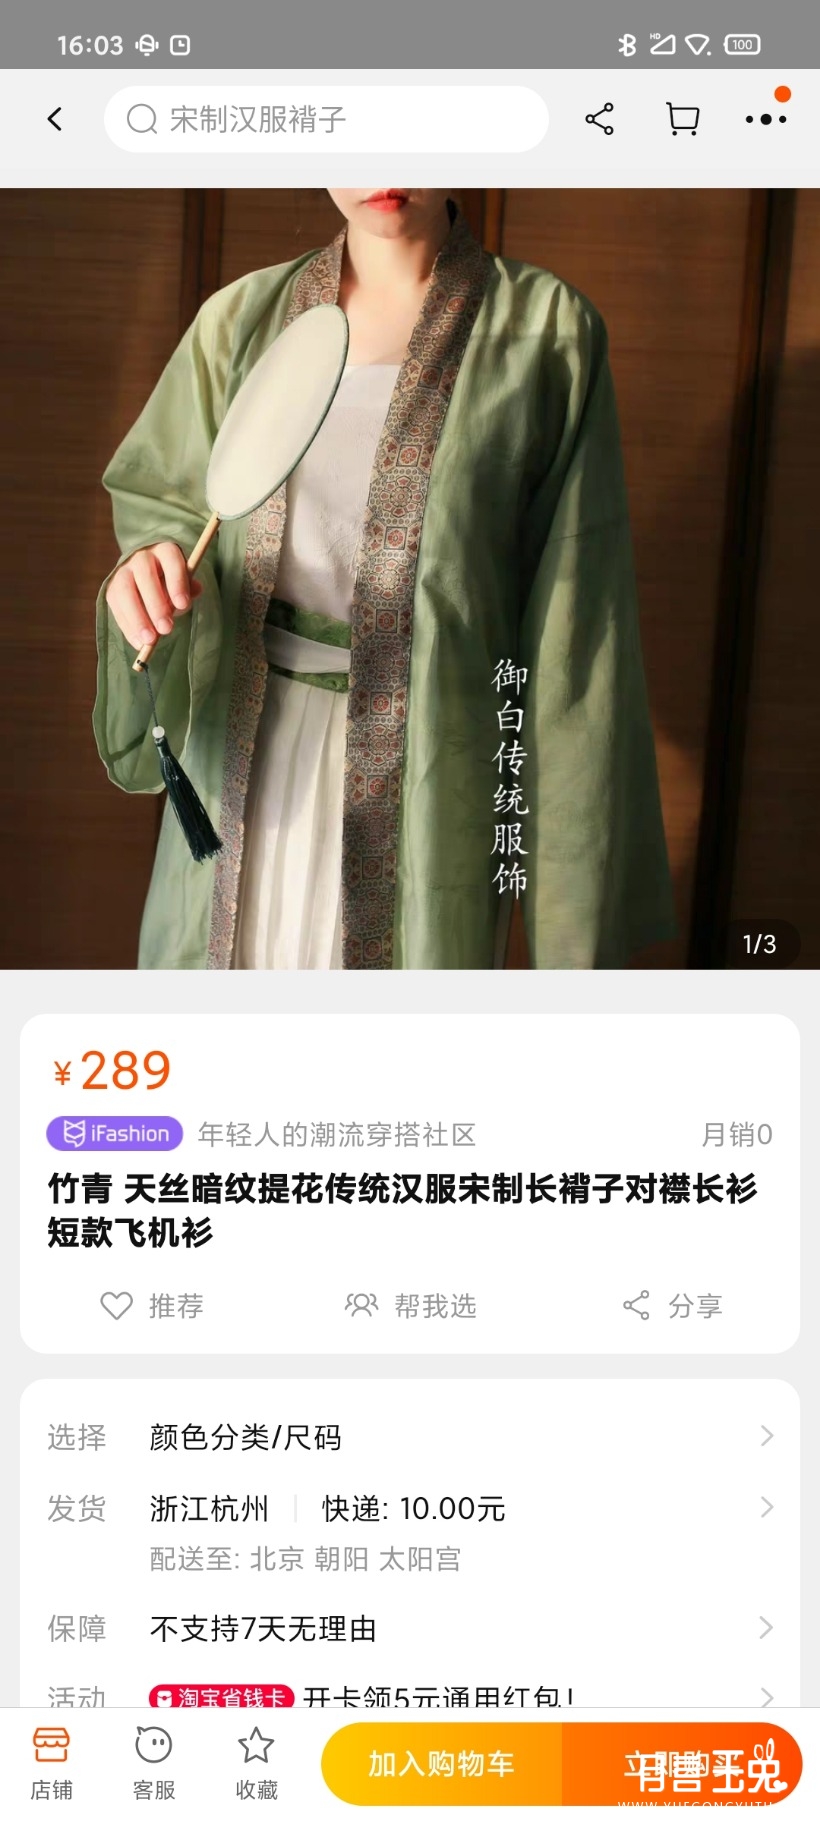 Screenshot_2021-03-31-16-03-18-837_com.taobao.taobao.jpg